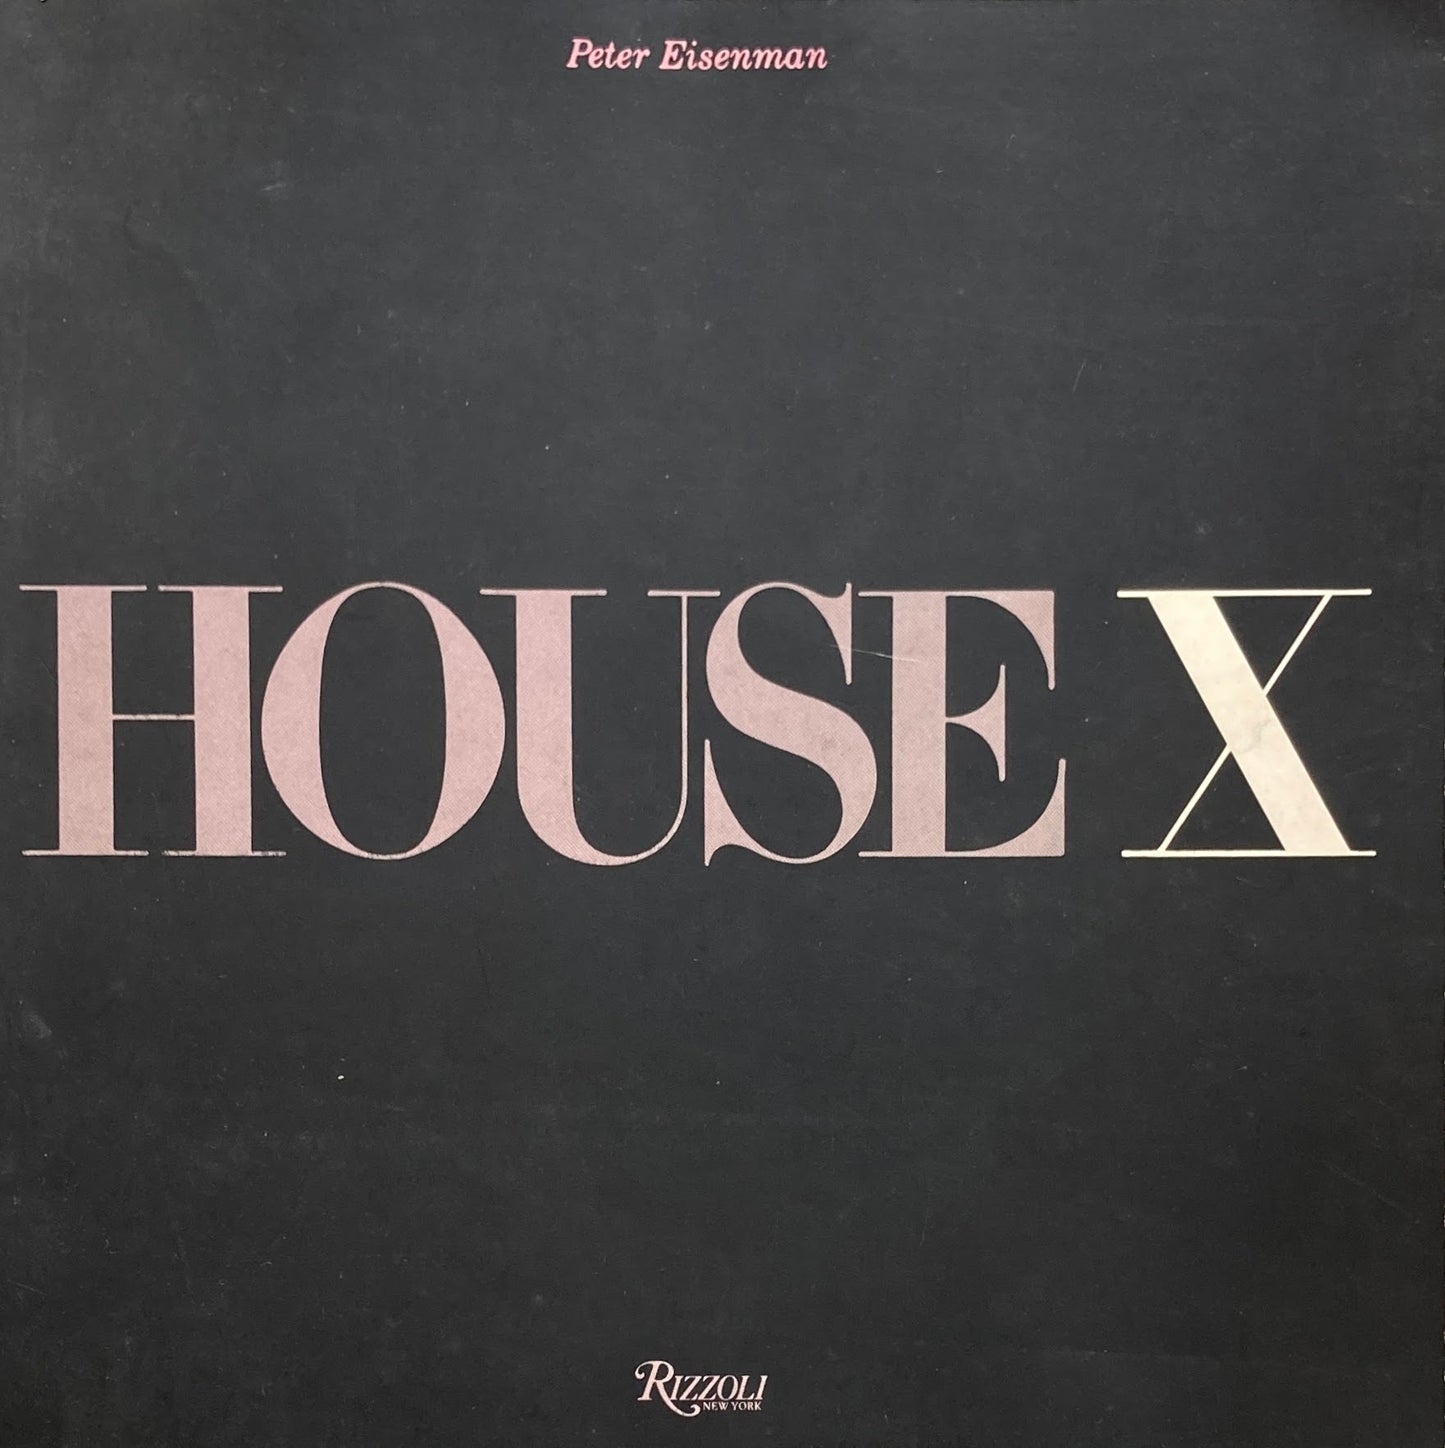 HOUSE X  Peter Eisenman